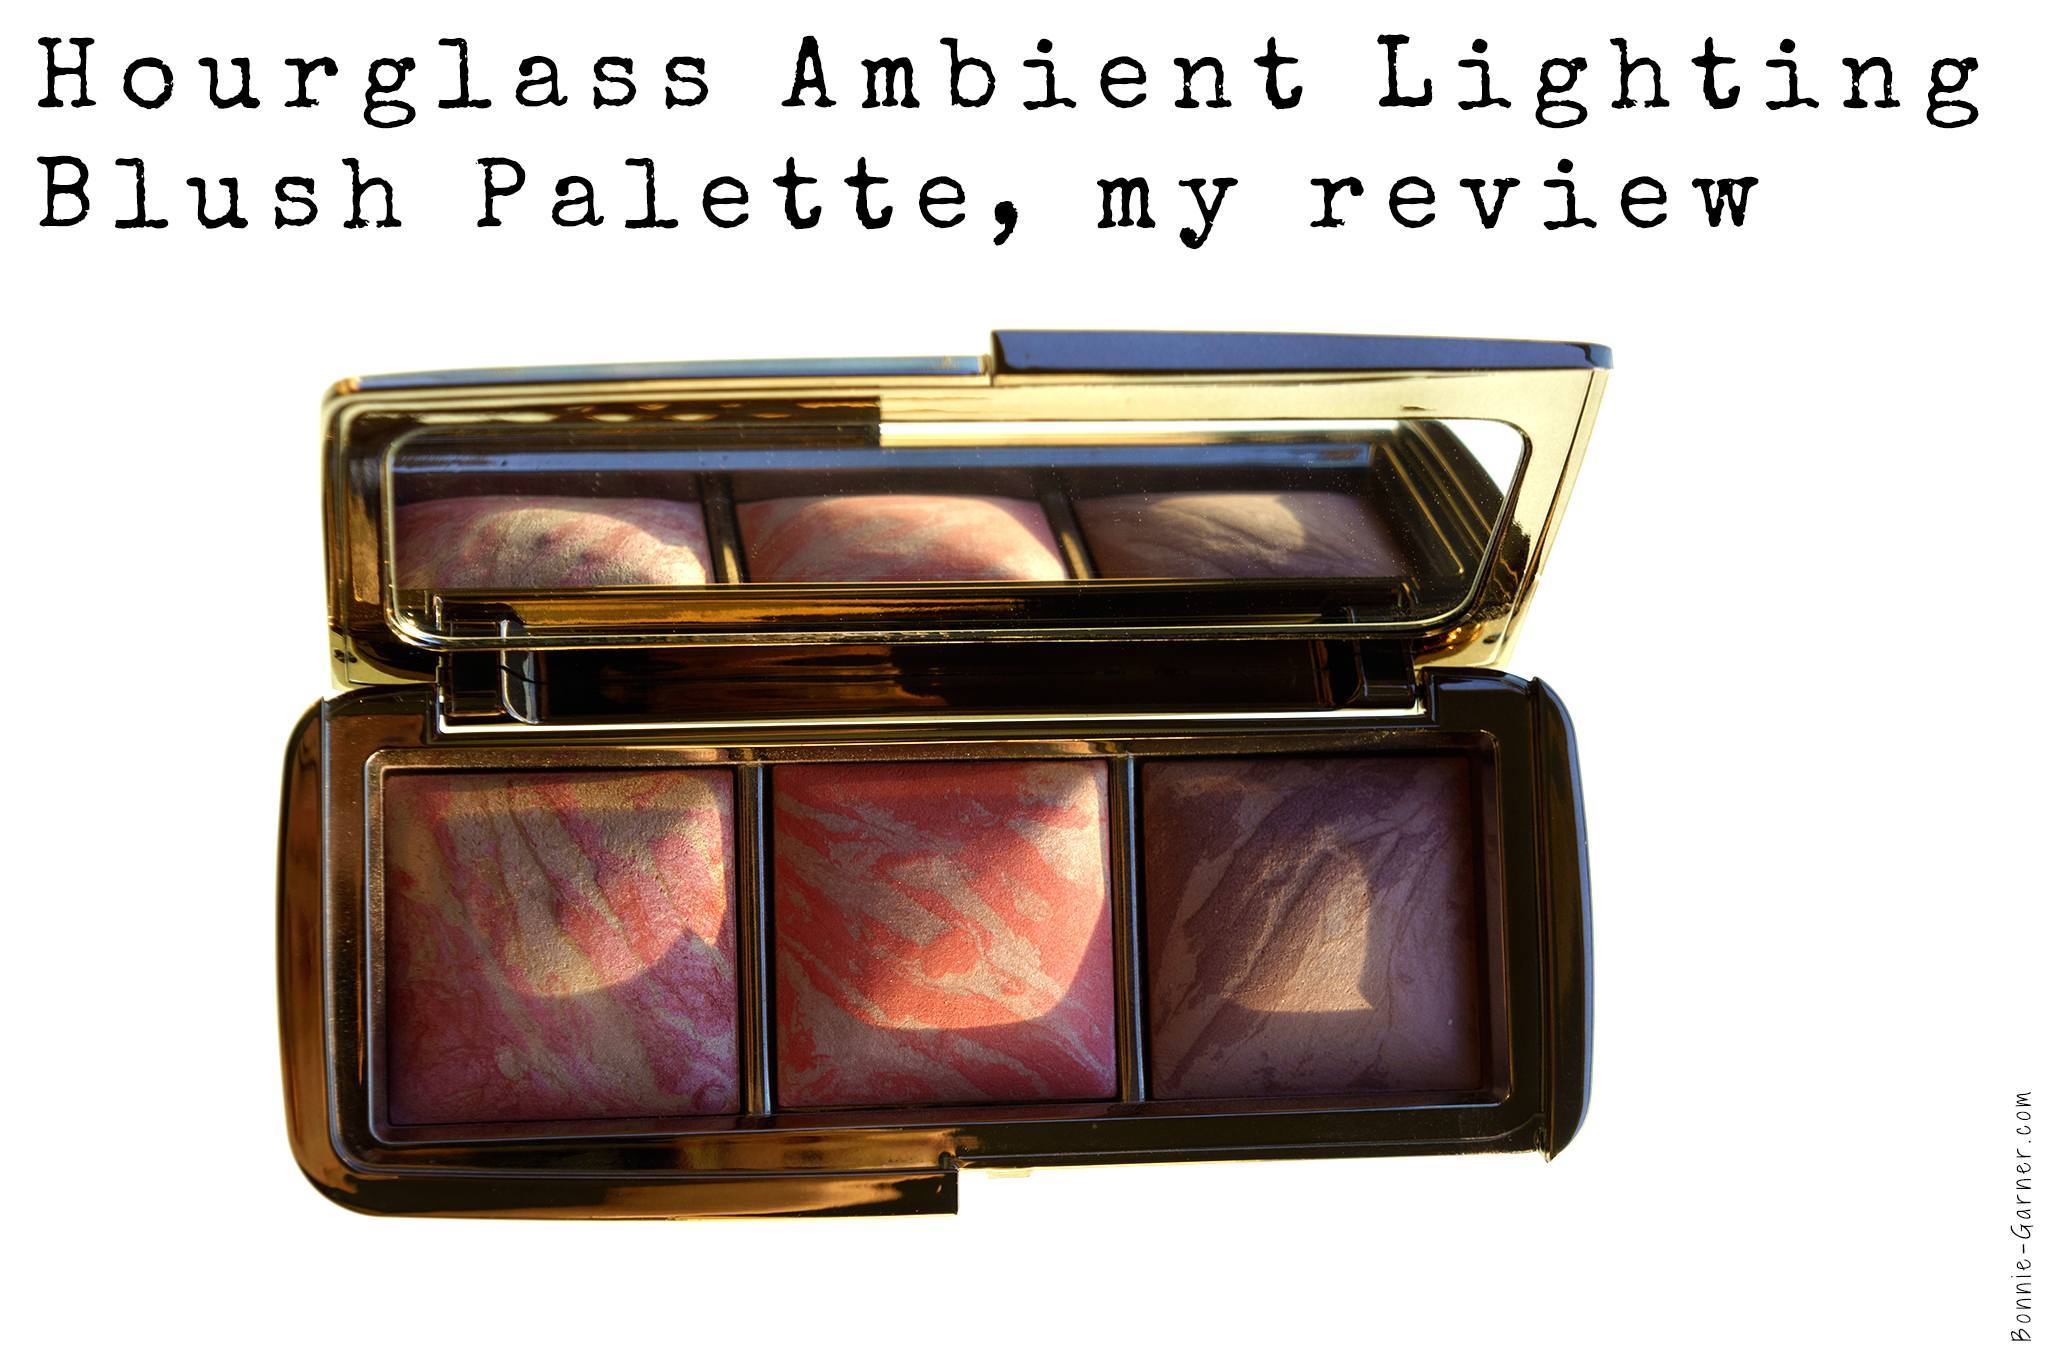 Hourglass Ambient Lighting Blush Palette, my review